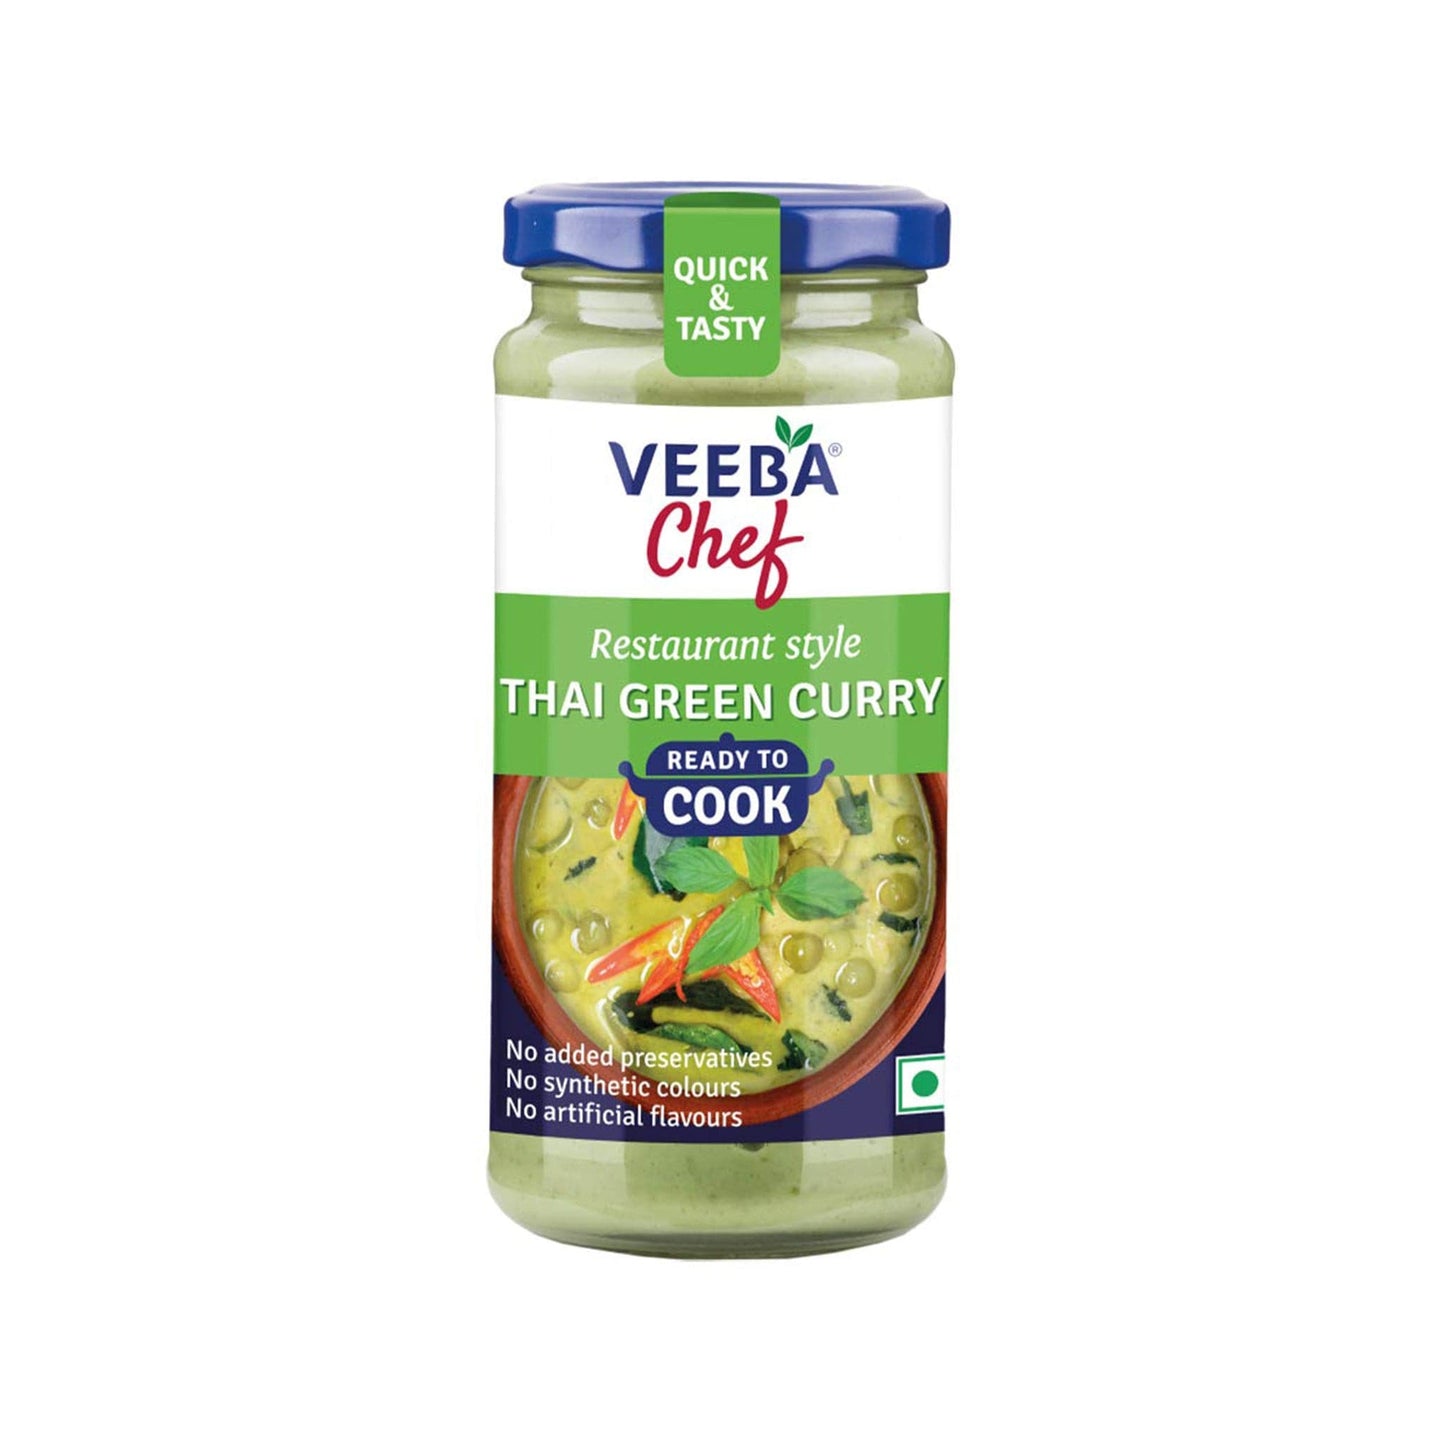 Veeba Chef Thai Green Curry (7047390658747)